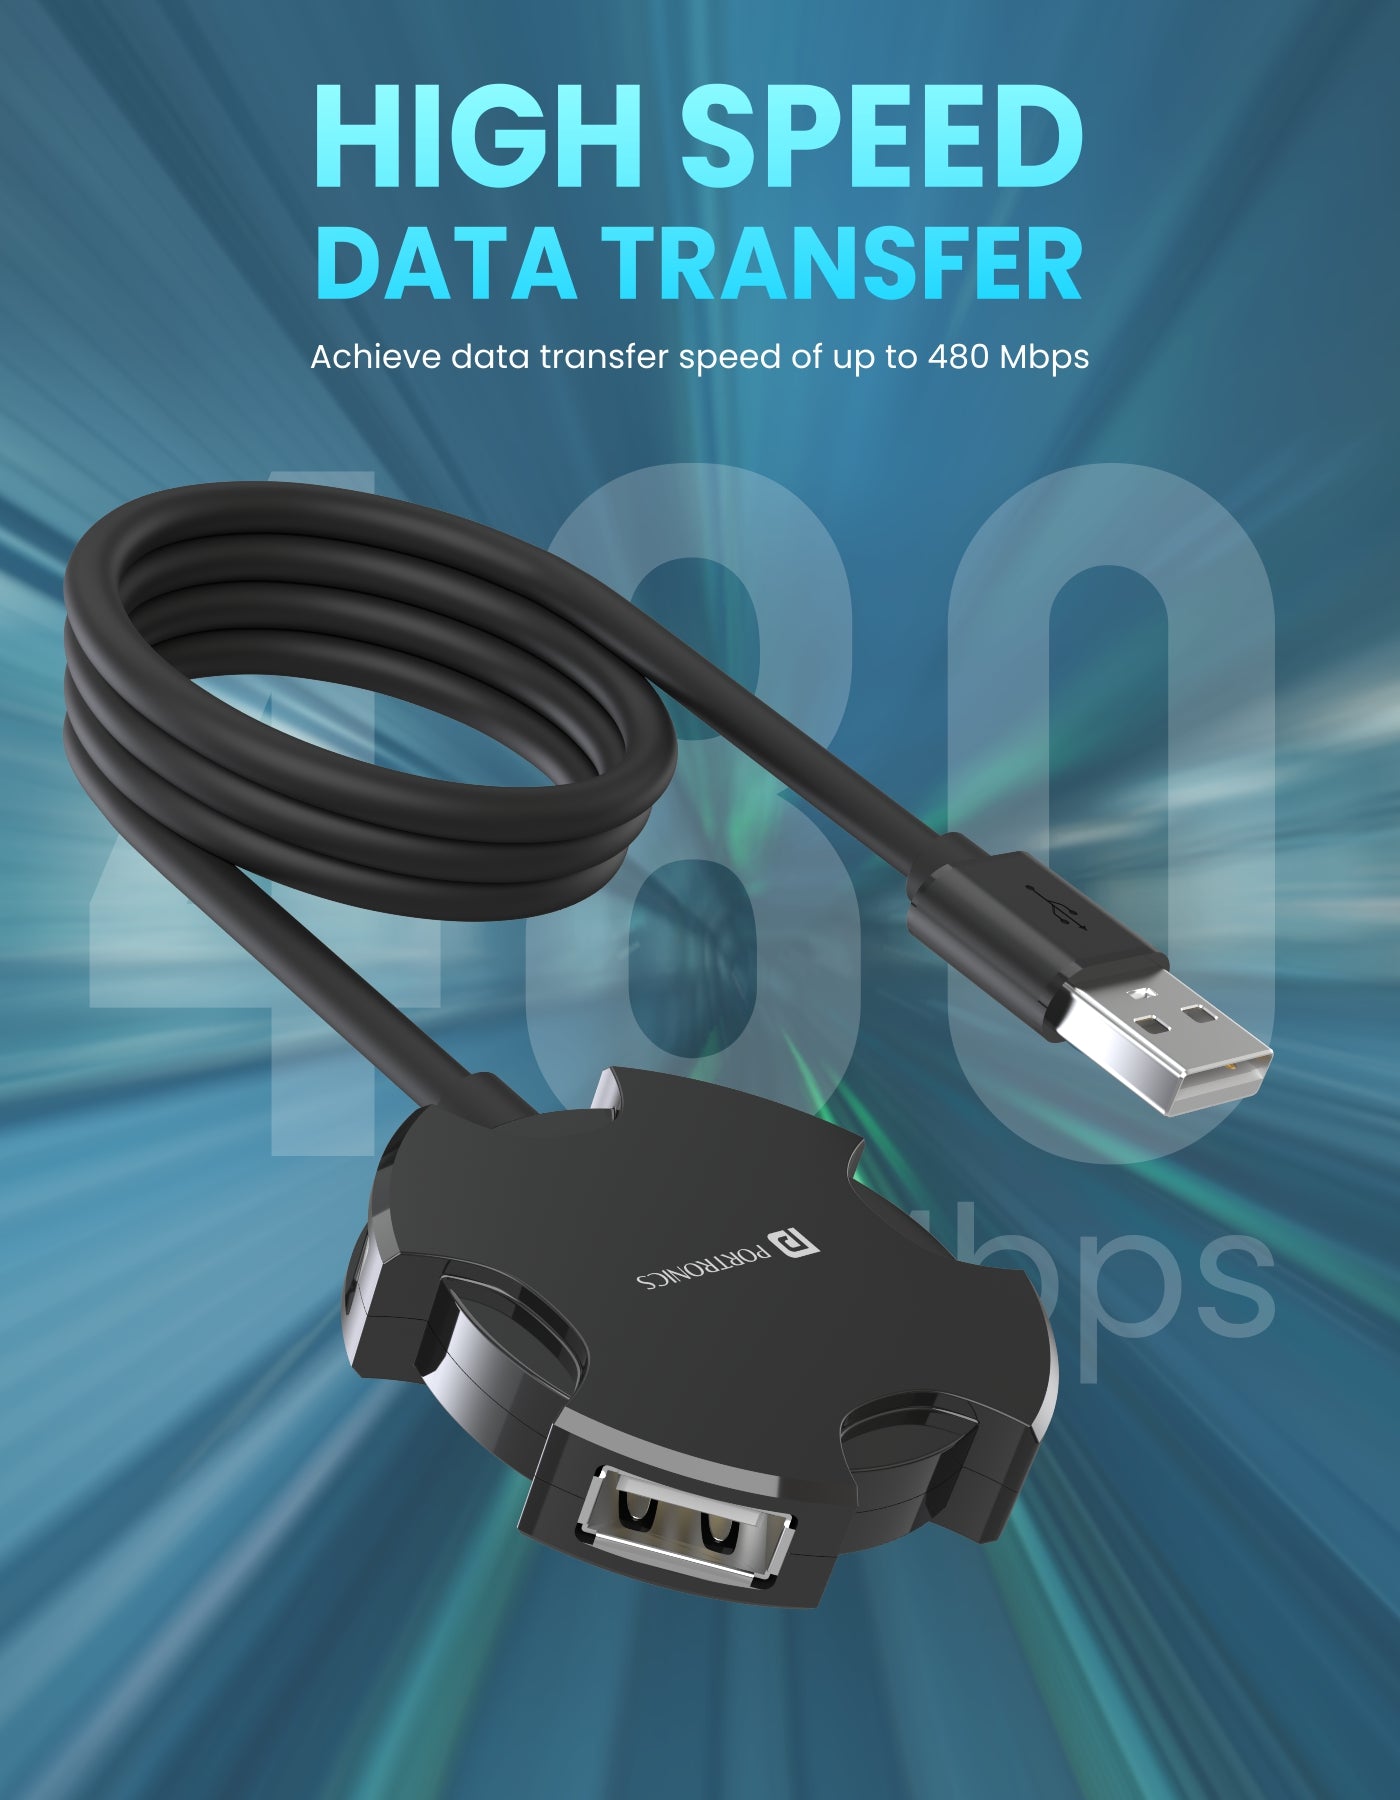 Portronics Mport 4C Portable USB Port Hub with 4 USB Slots fast data transfer